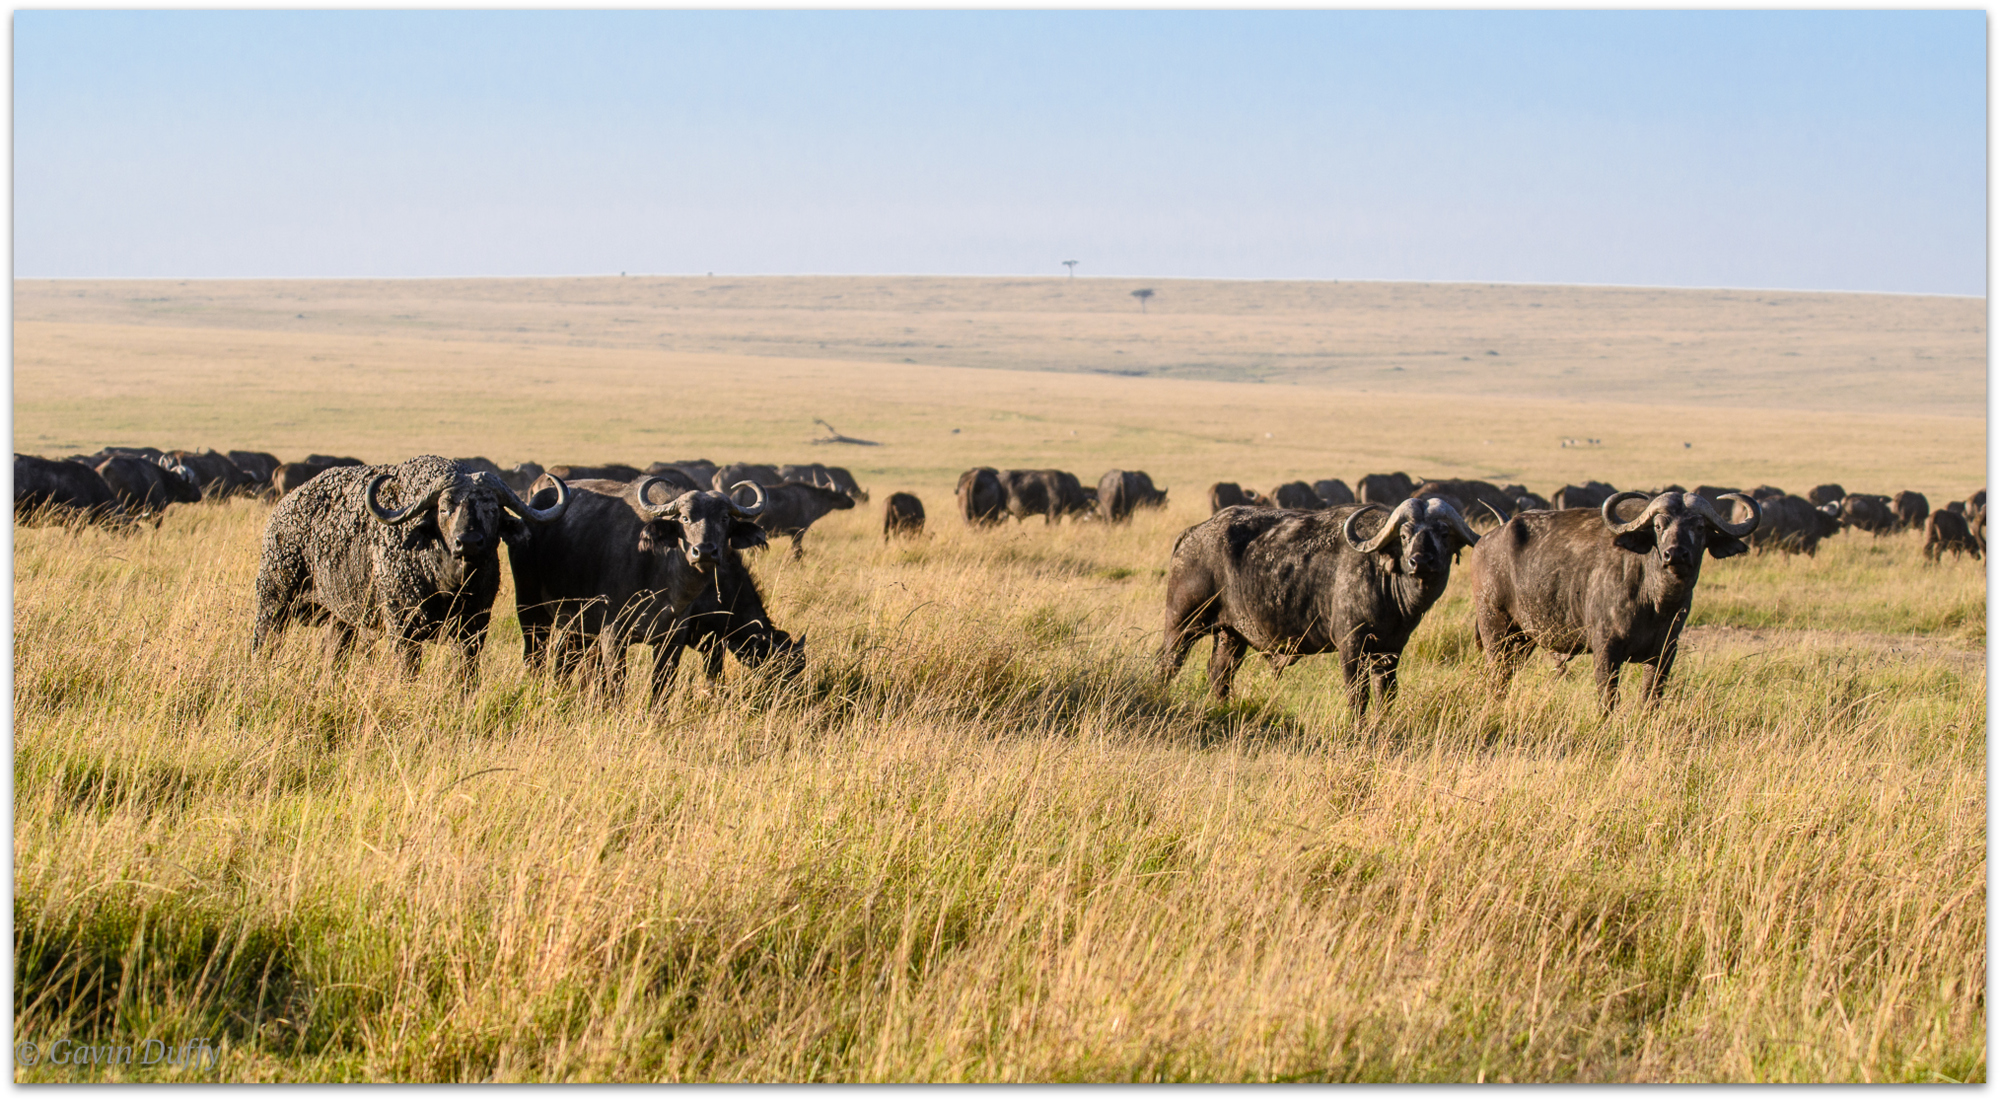 Sentinels of migrating buffalo herd © Gavin Duffy